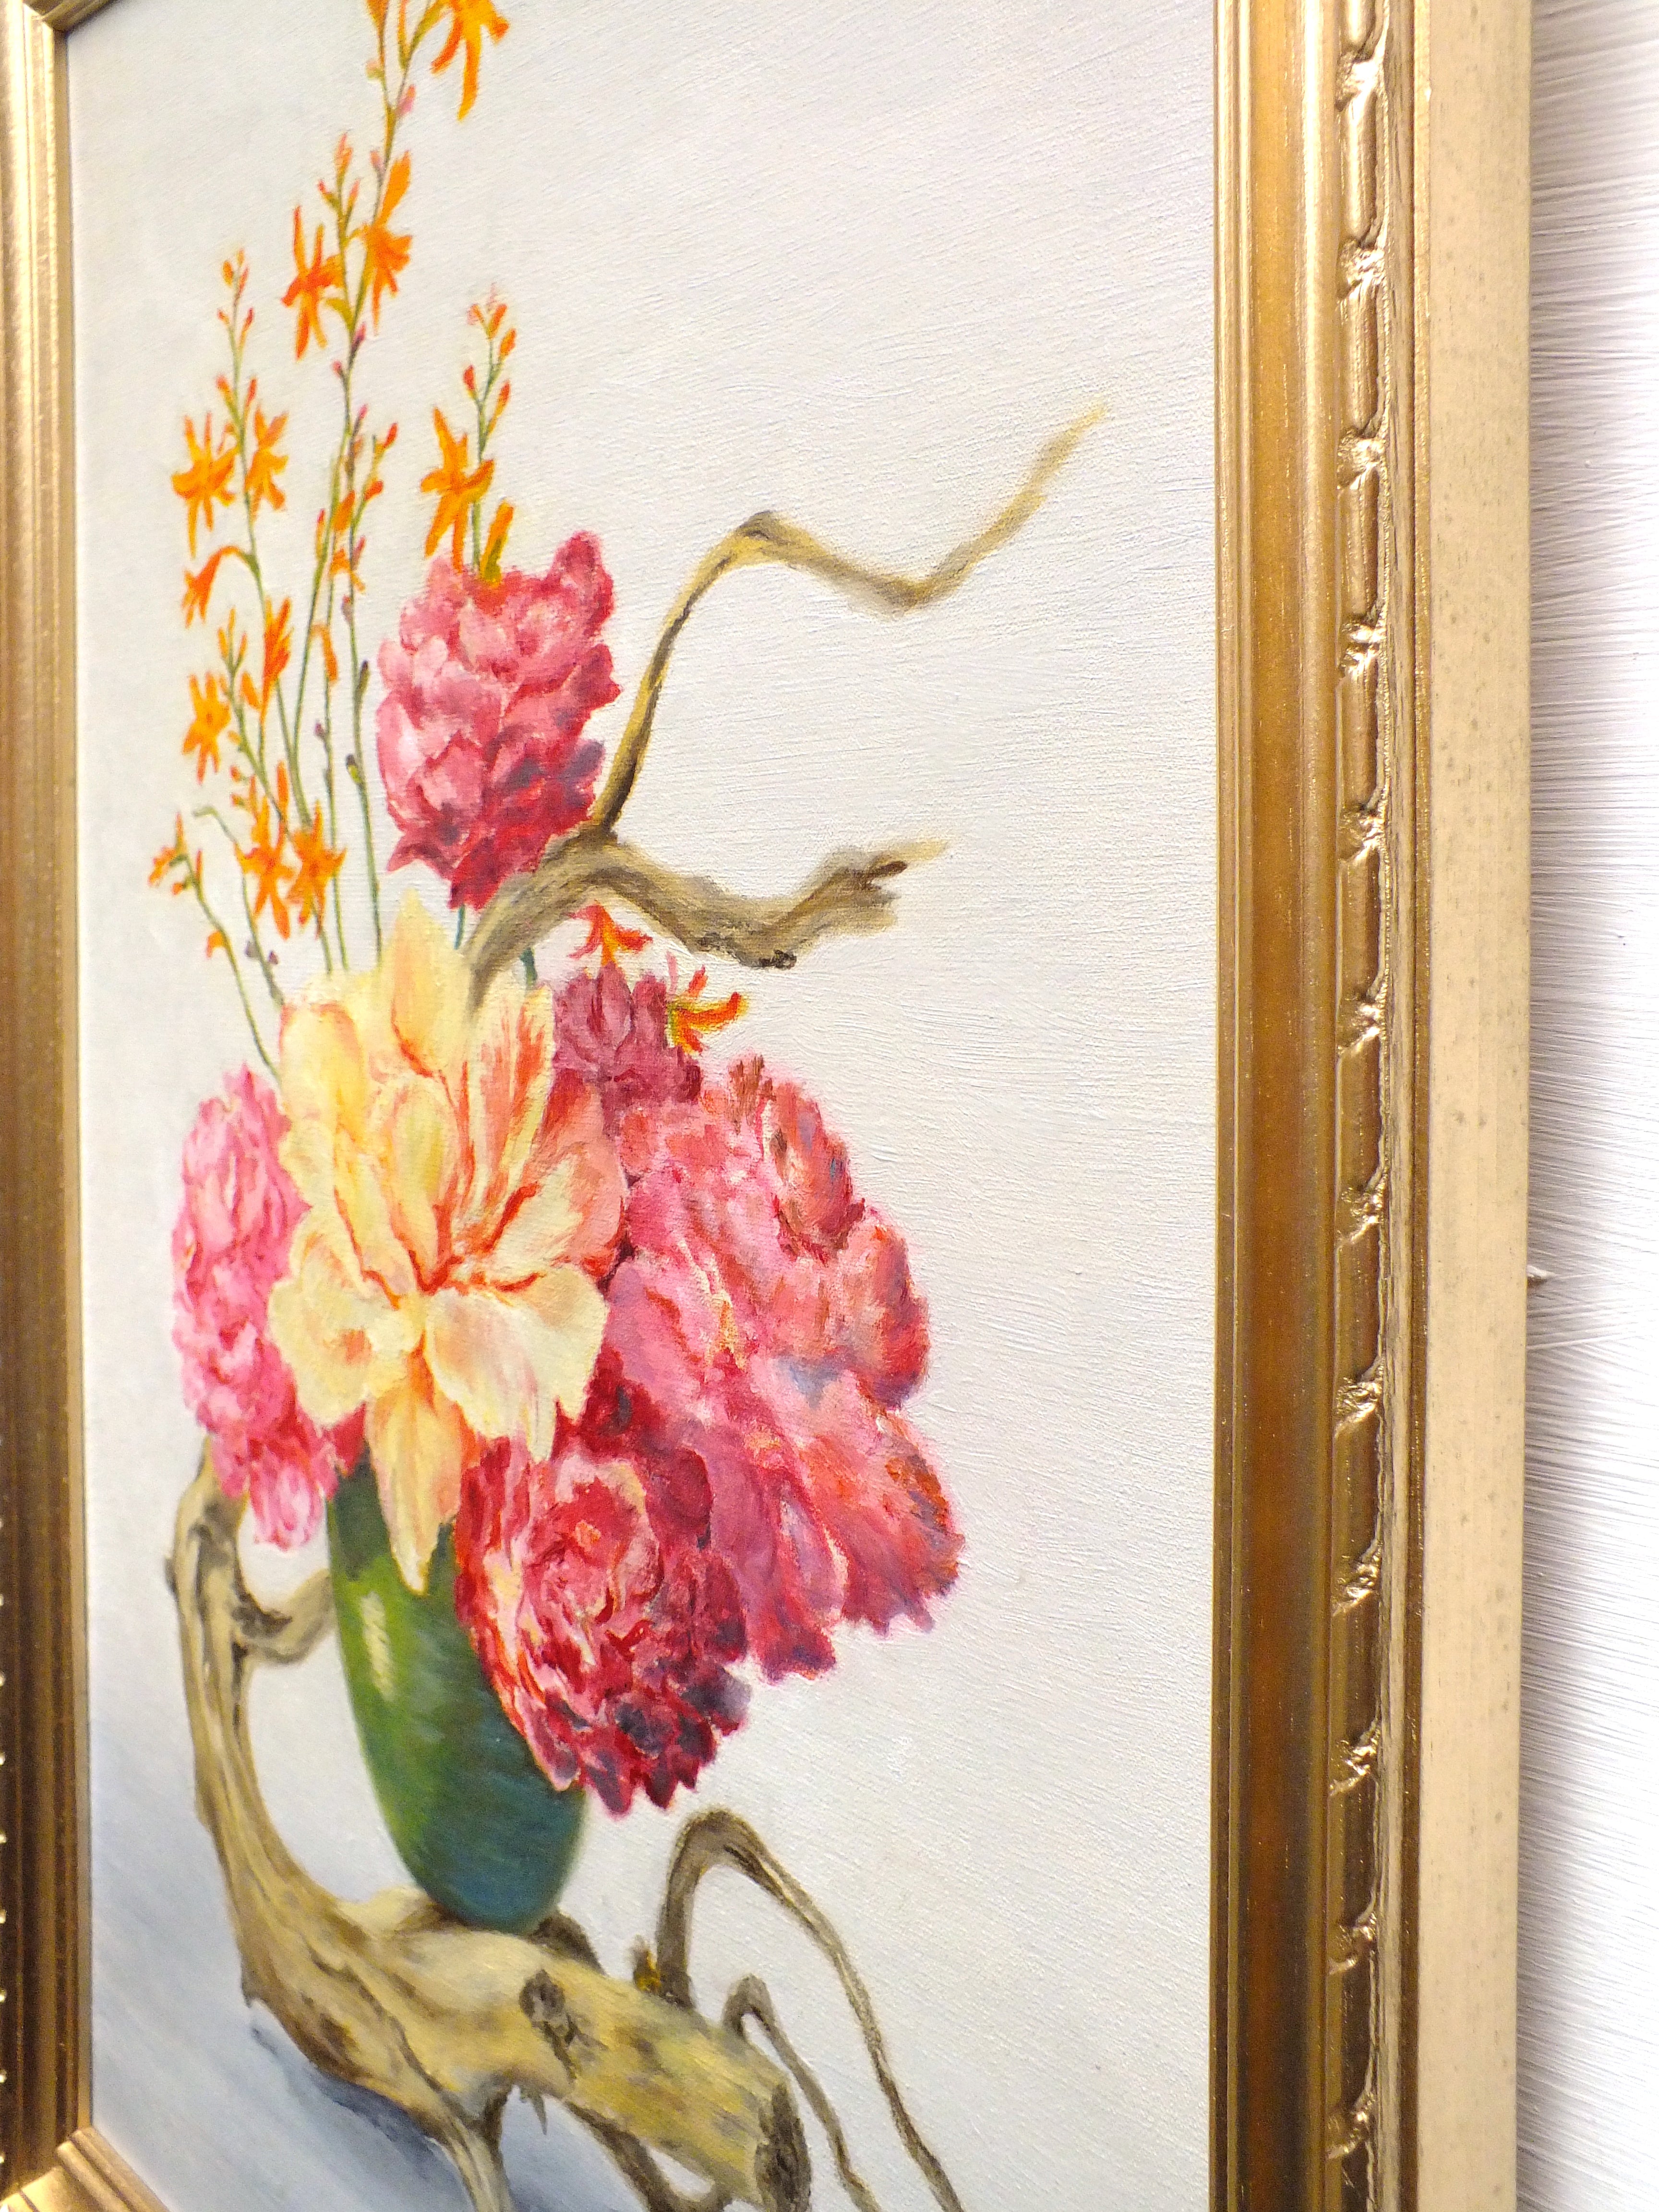 Pink Carnations Still Life Vintage Oil Painting Framed Original Flowers